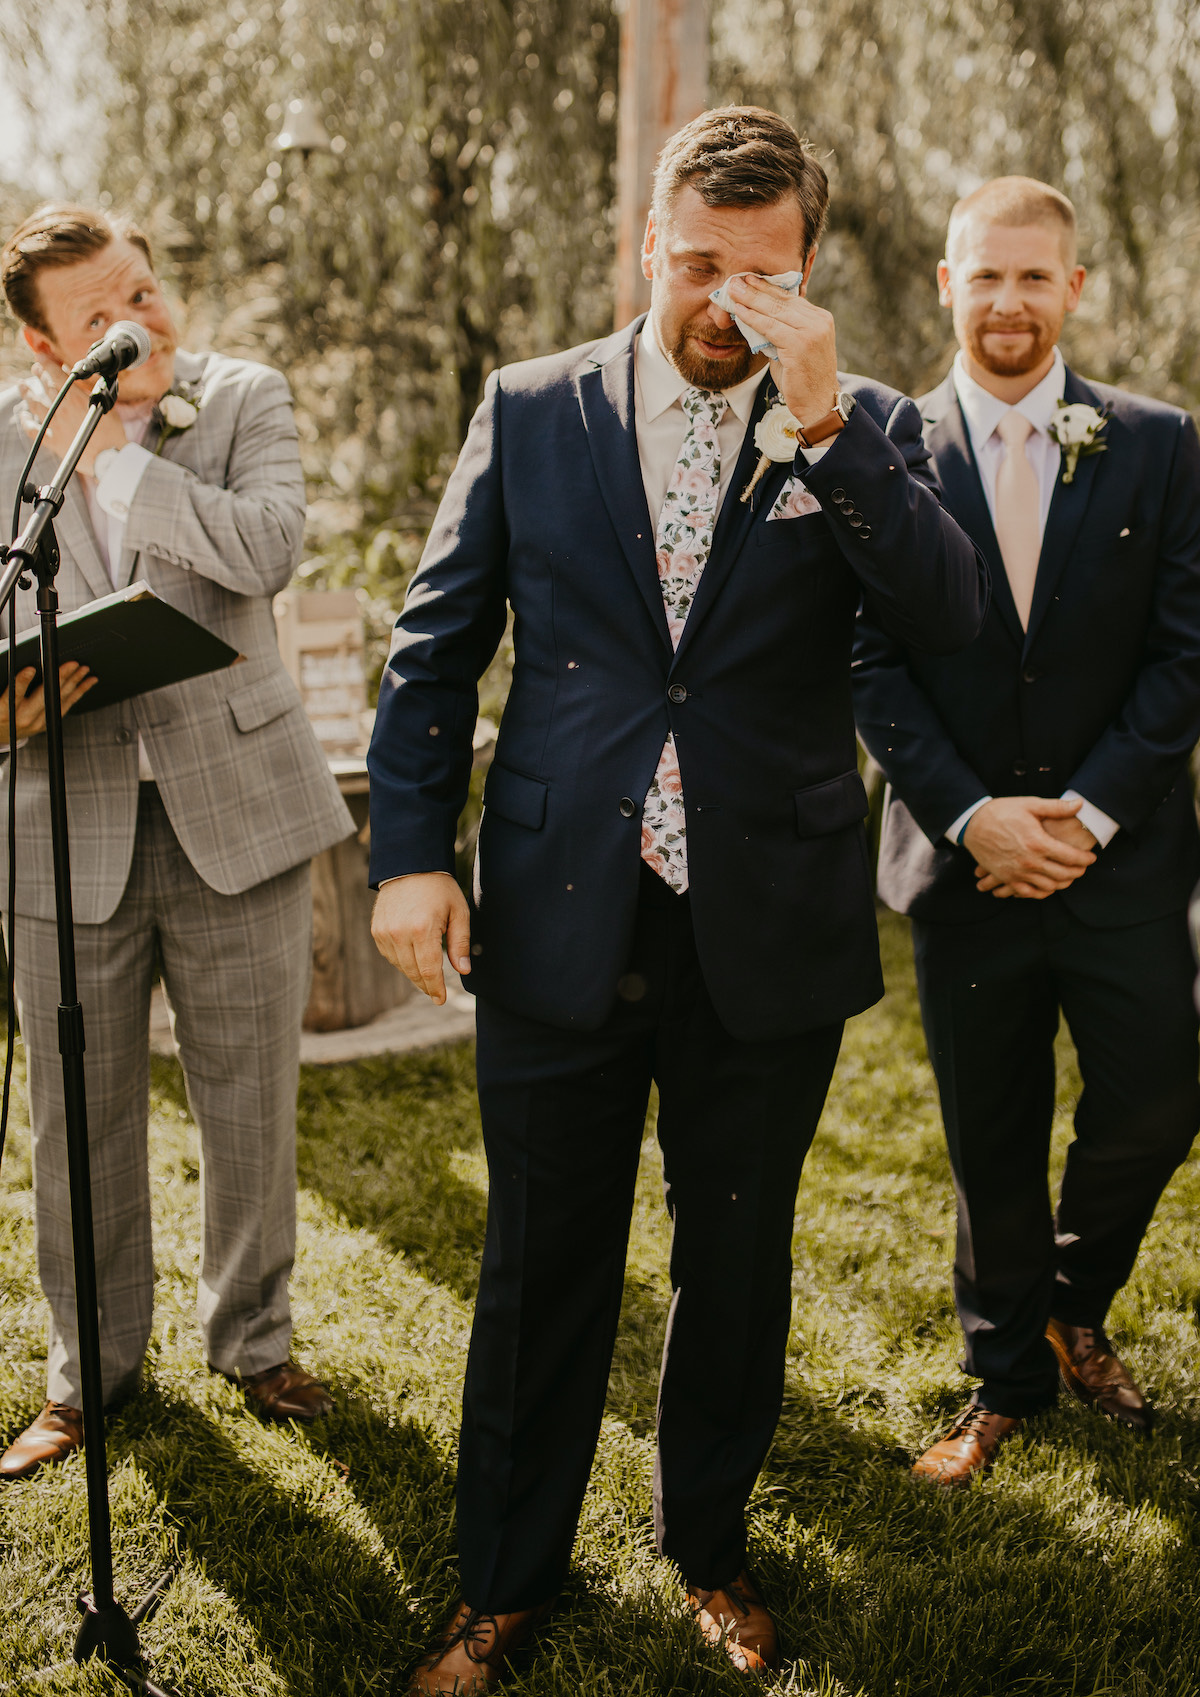 Groom gets emotional at wedding ceremony seeing his bride